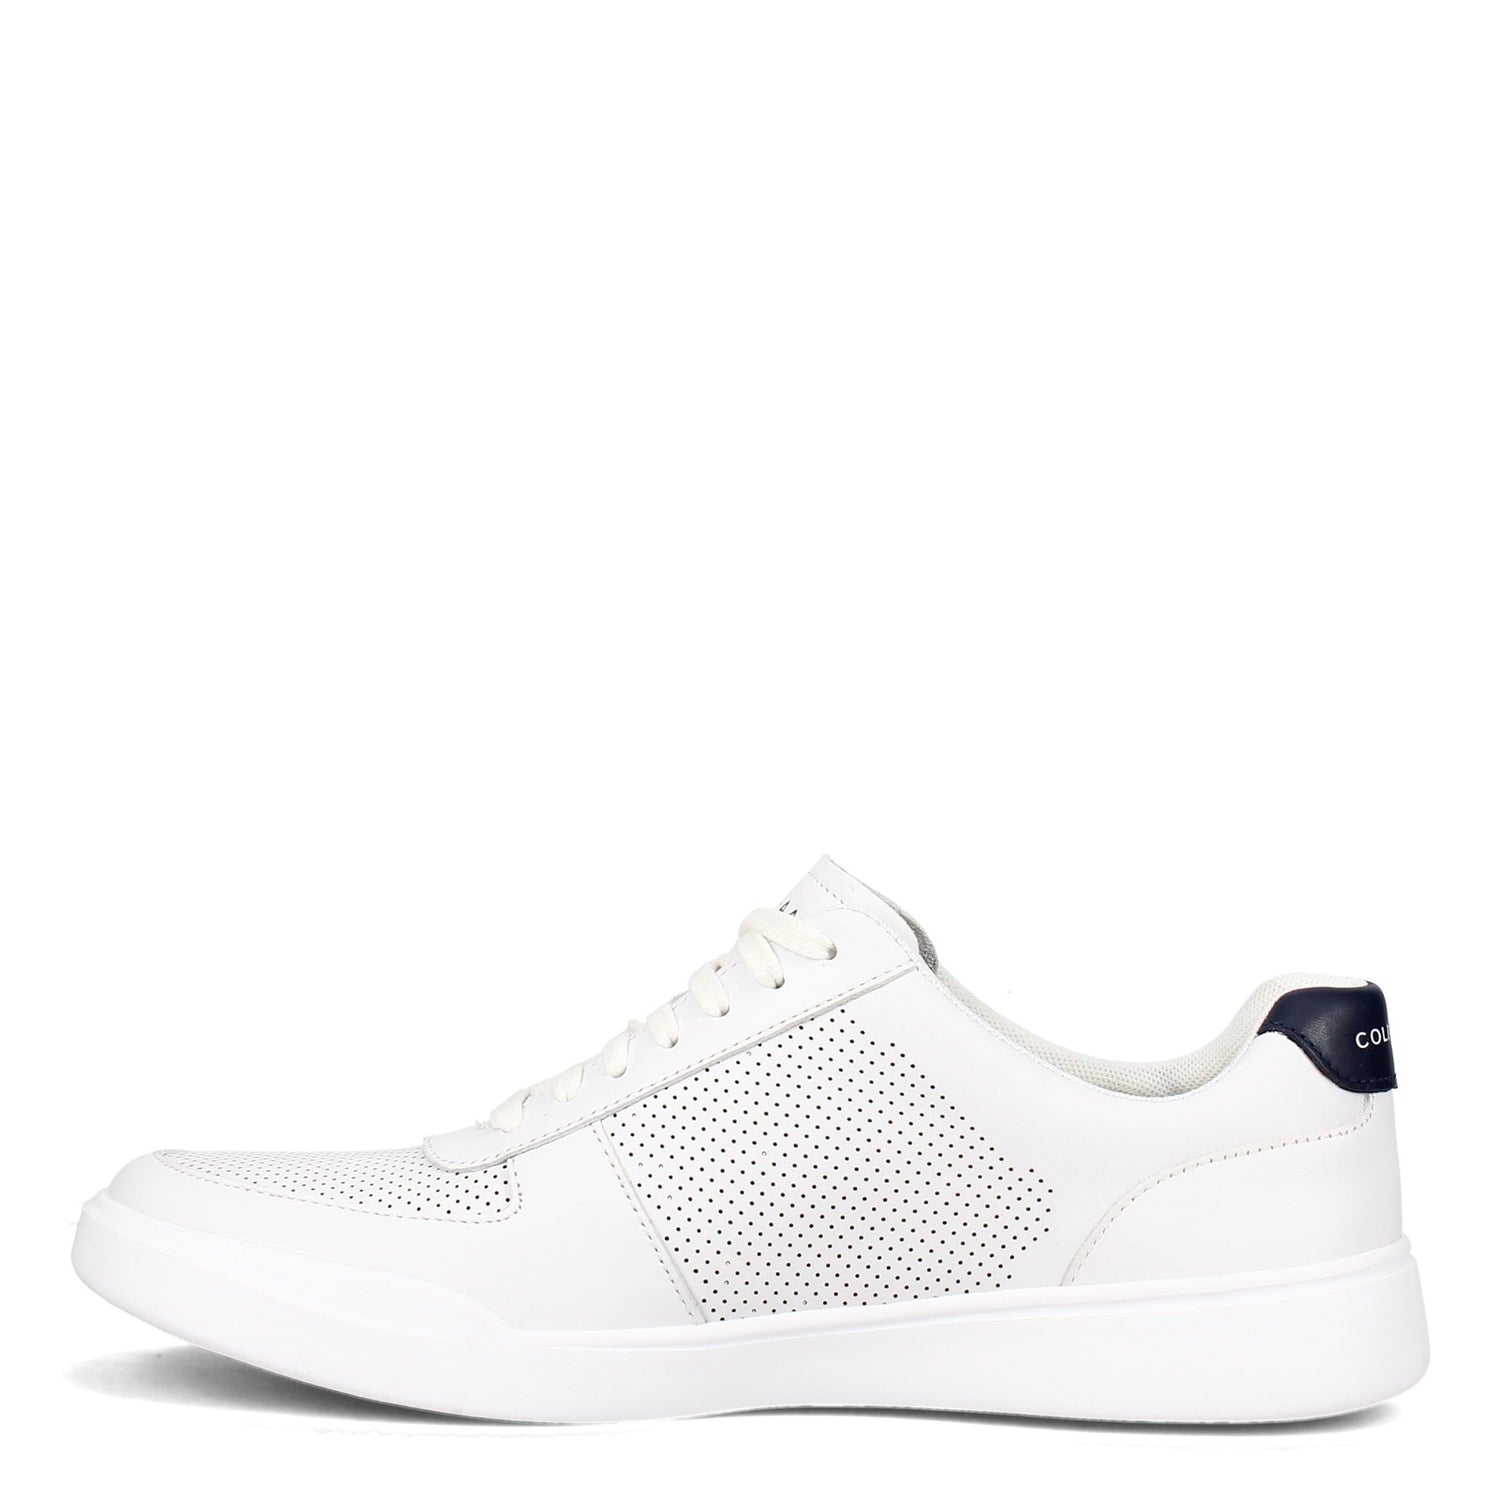 Peltz Shoes  Men's Cole Haan Grand Crosscourt Modern Perf Sneaker WHITE NAVY C33987